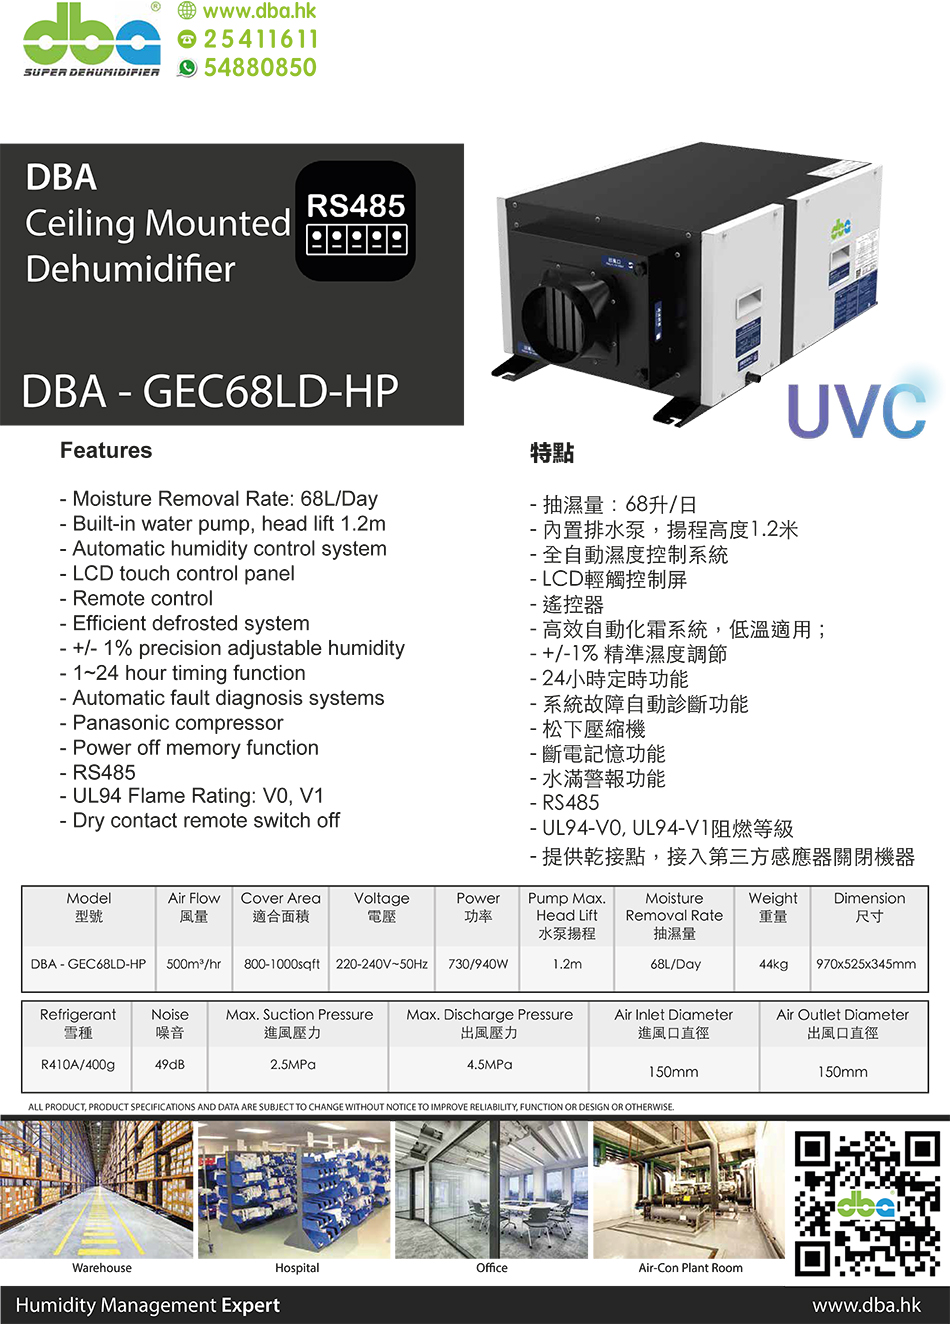 DBA吊頂抽濕機供應及安裝⼯程DBA-GEC68LD-HP-殺菌消毒除濕機1